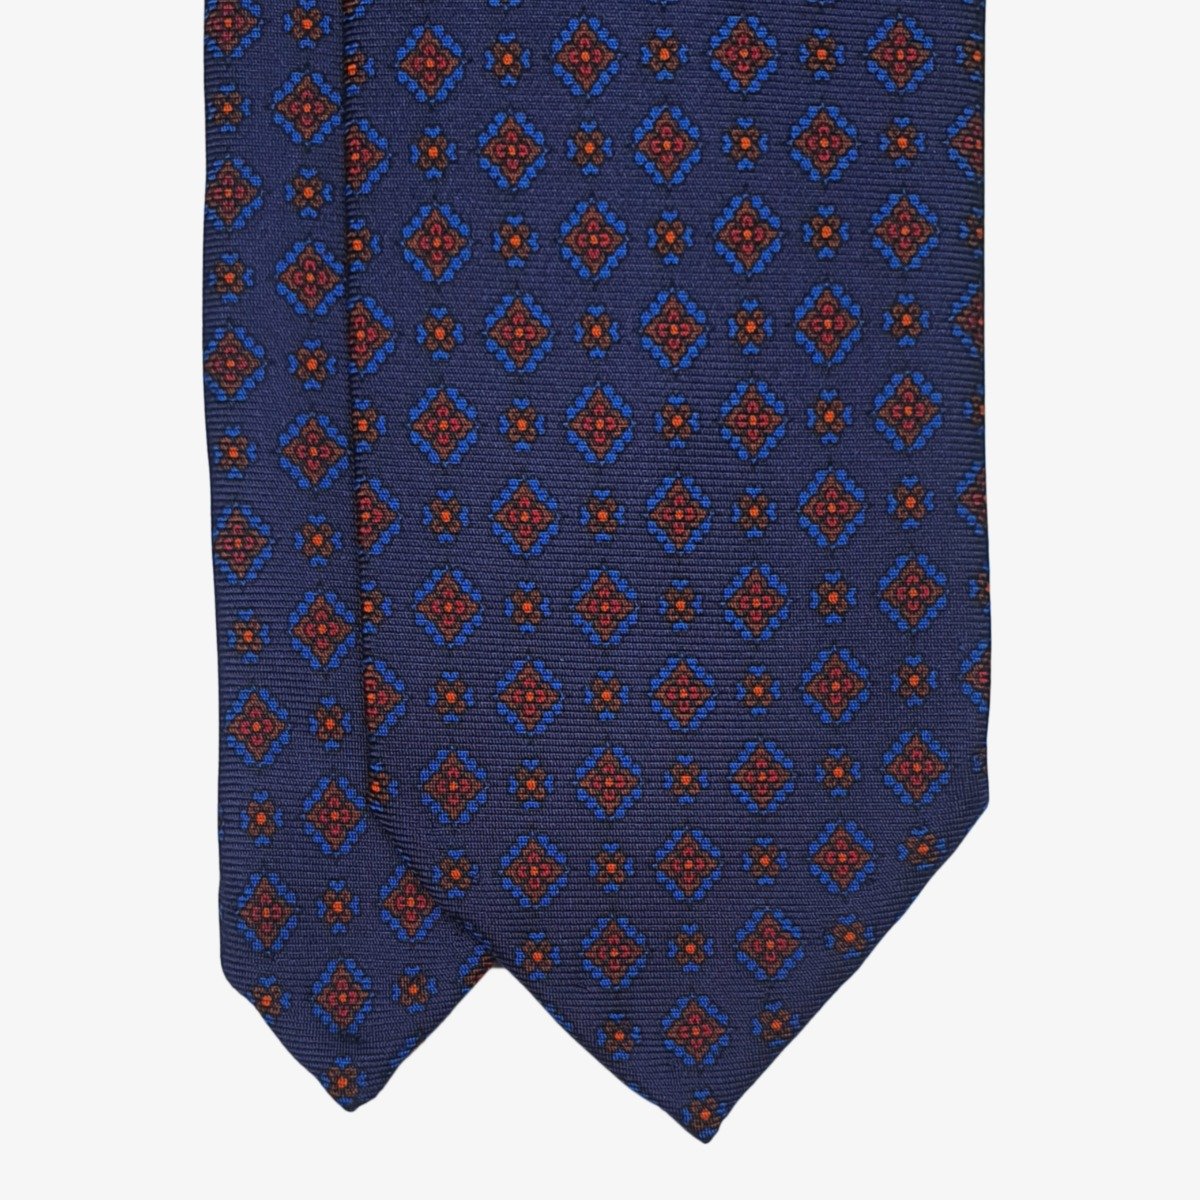 Shibumi Firenze navy ancient madder silk tie with orange flowers